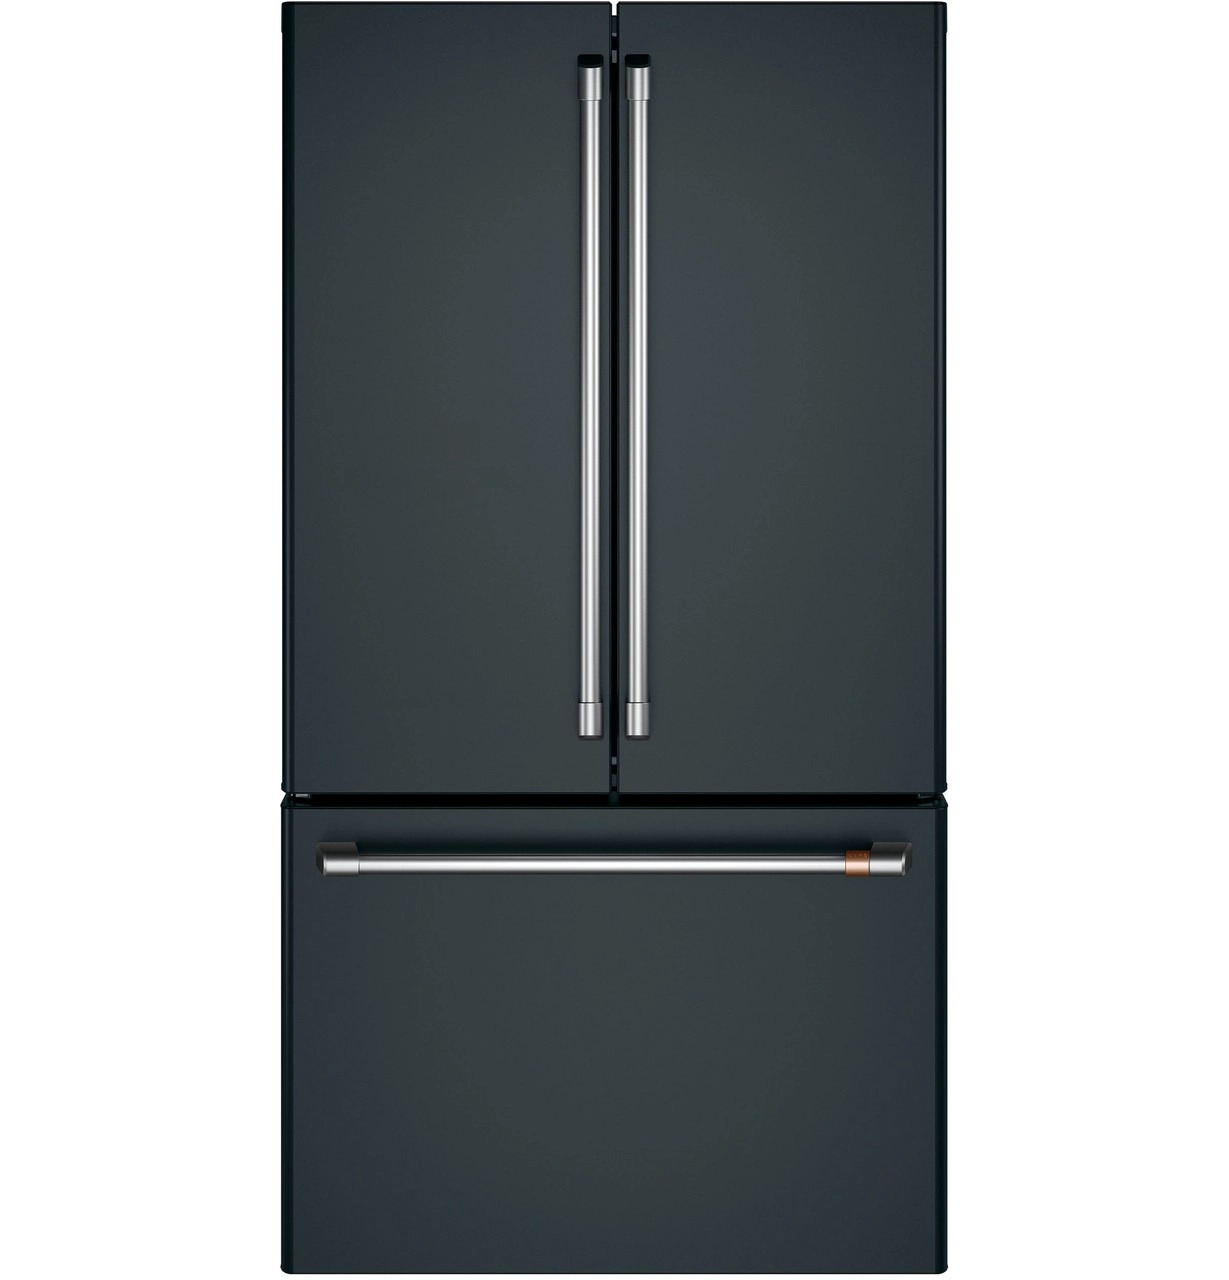 Black counter depth French door refrigerator